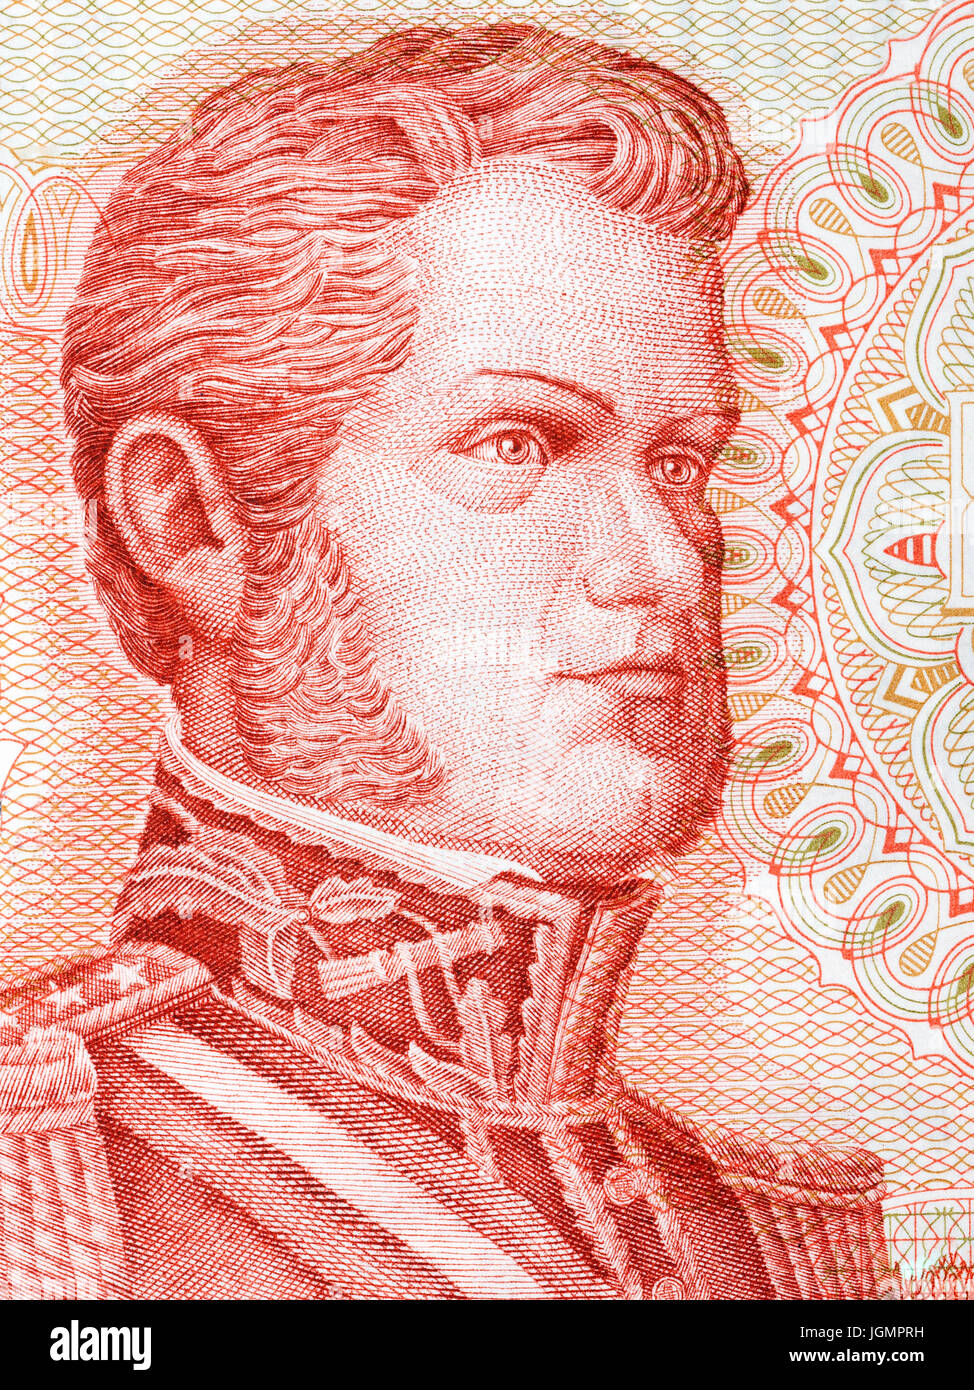 Bernardo O'Higgins portrait from Chilean money Stock Photo